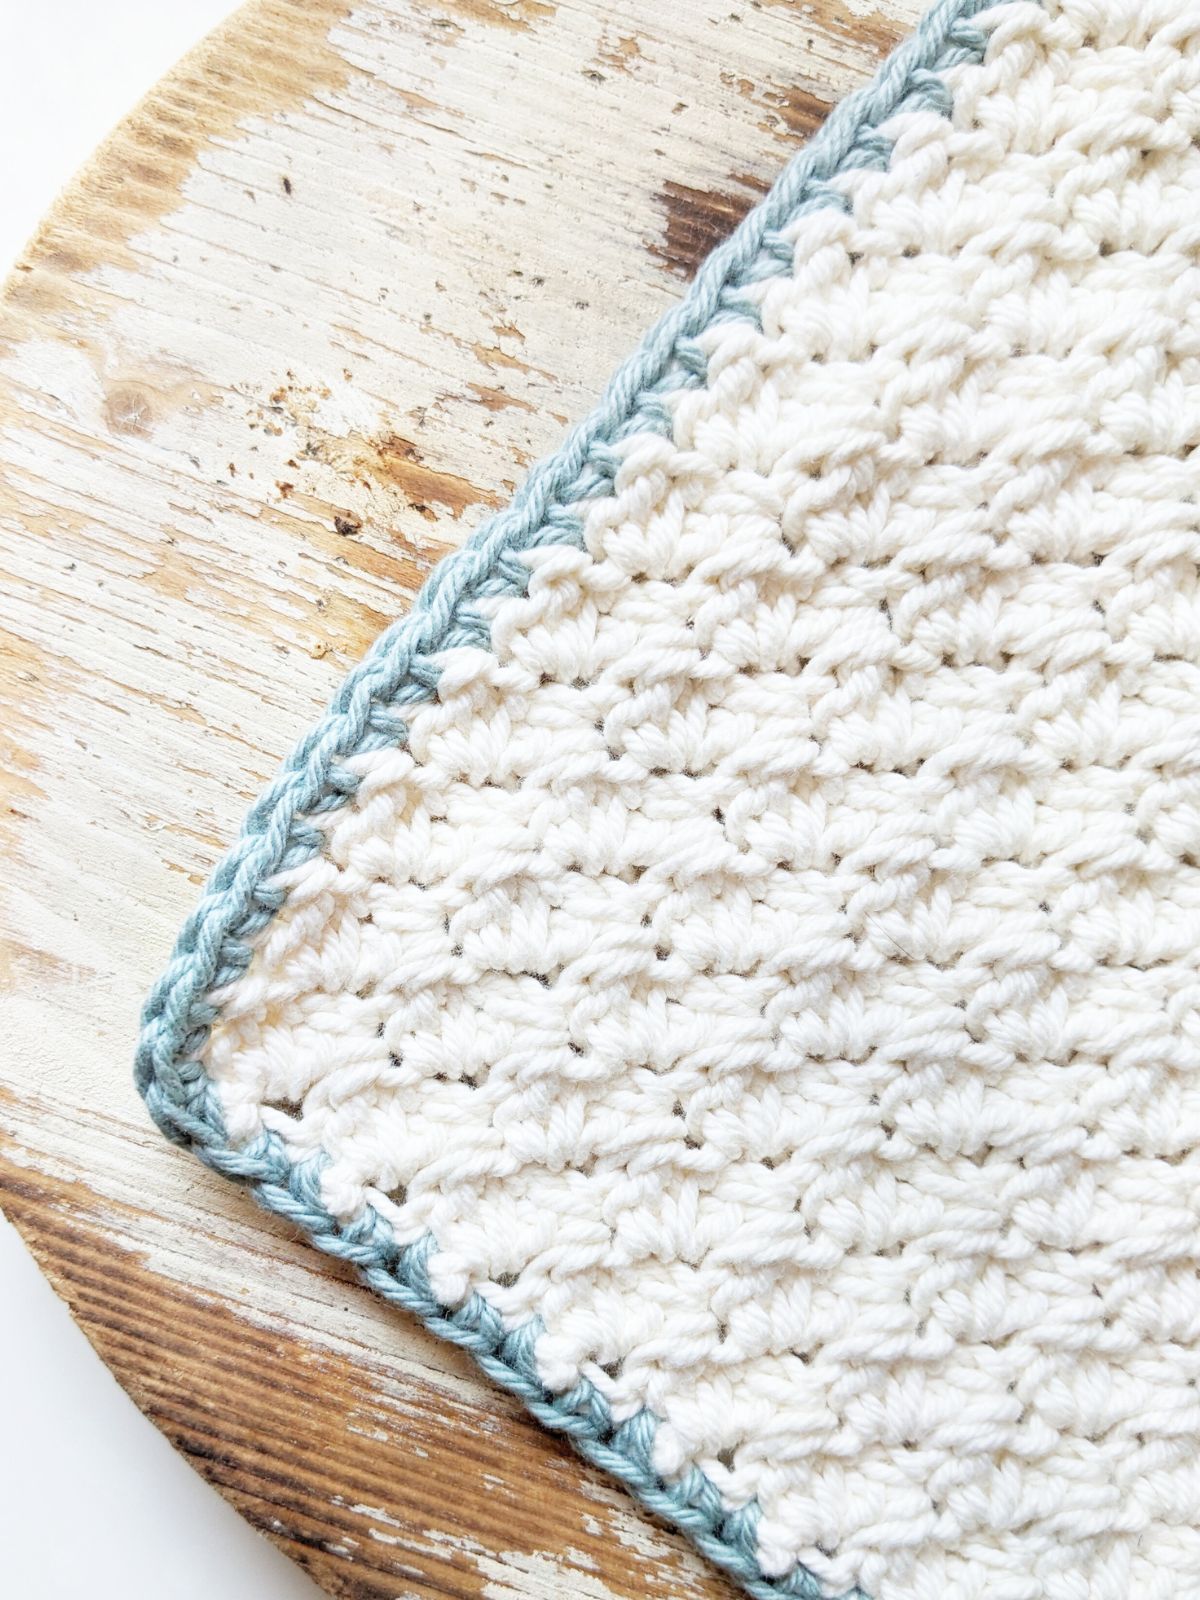 A crochet washcloth with a single crochet border on a wooden circular plank.